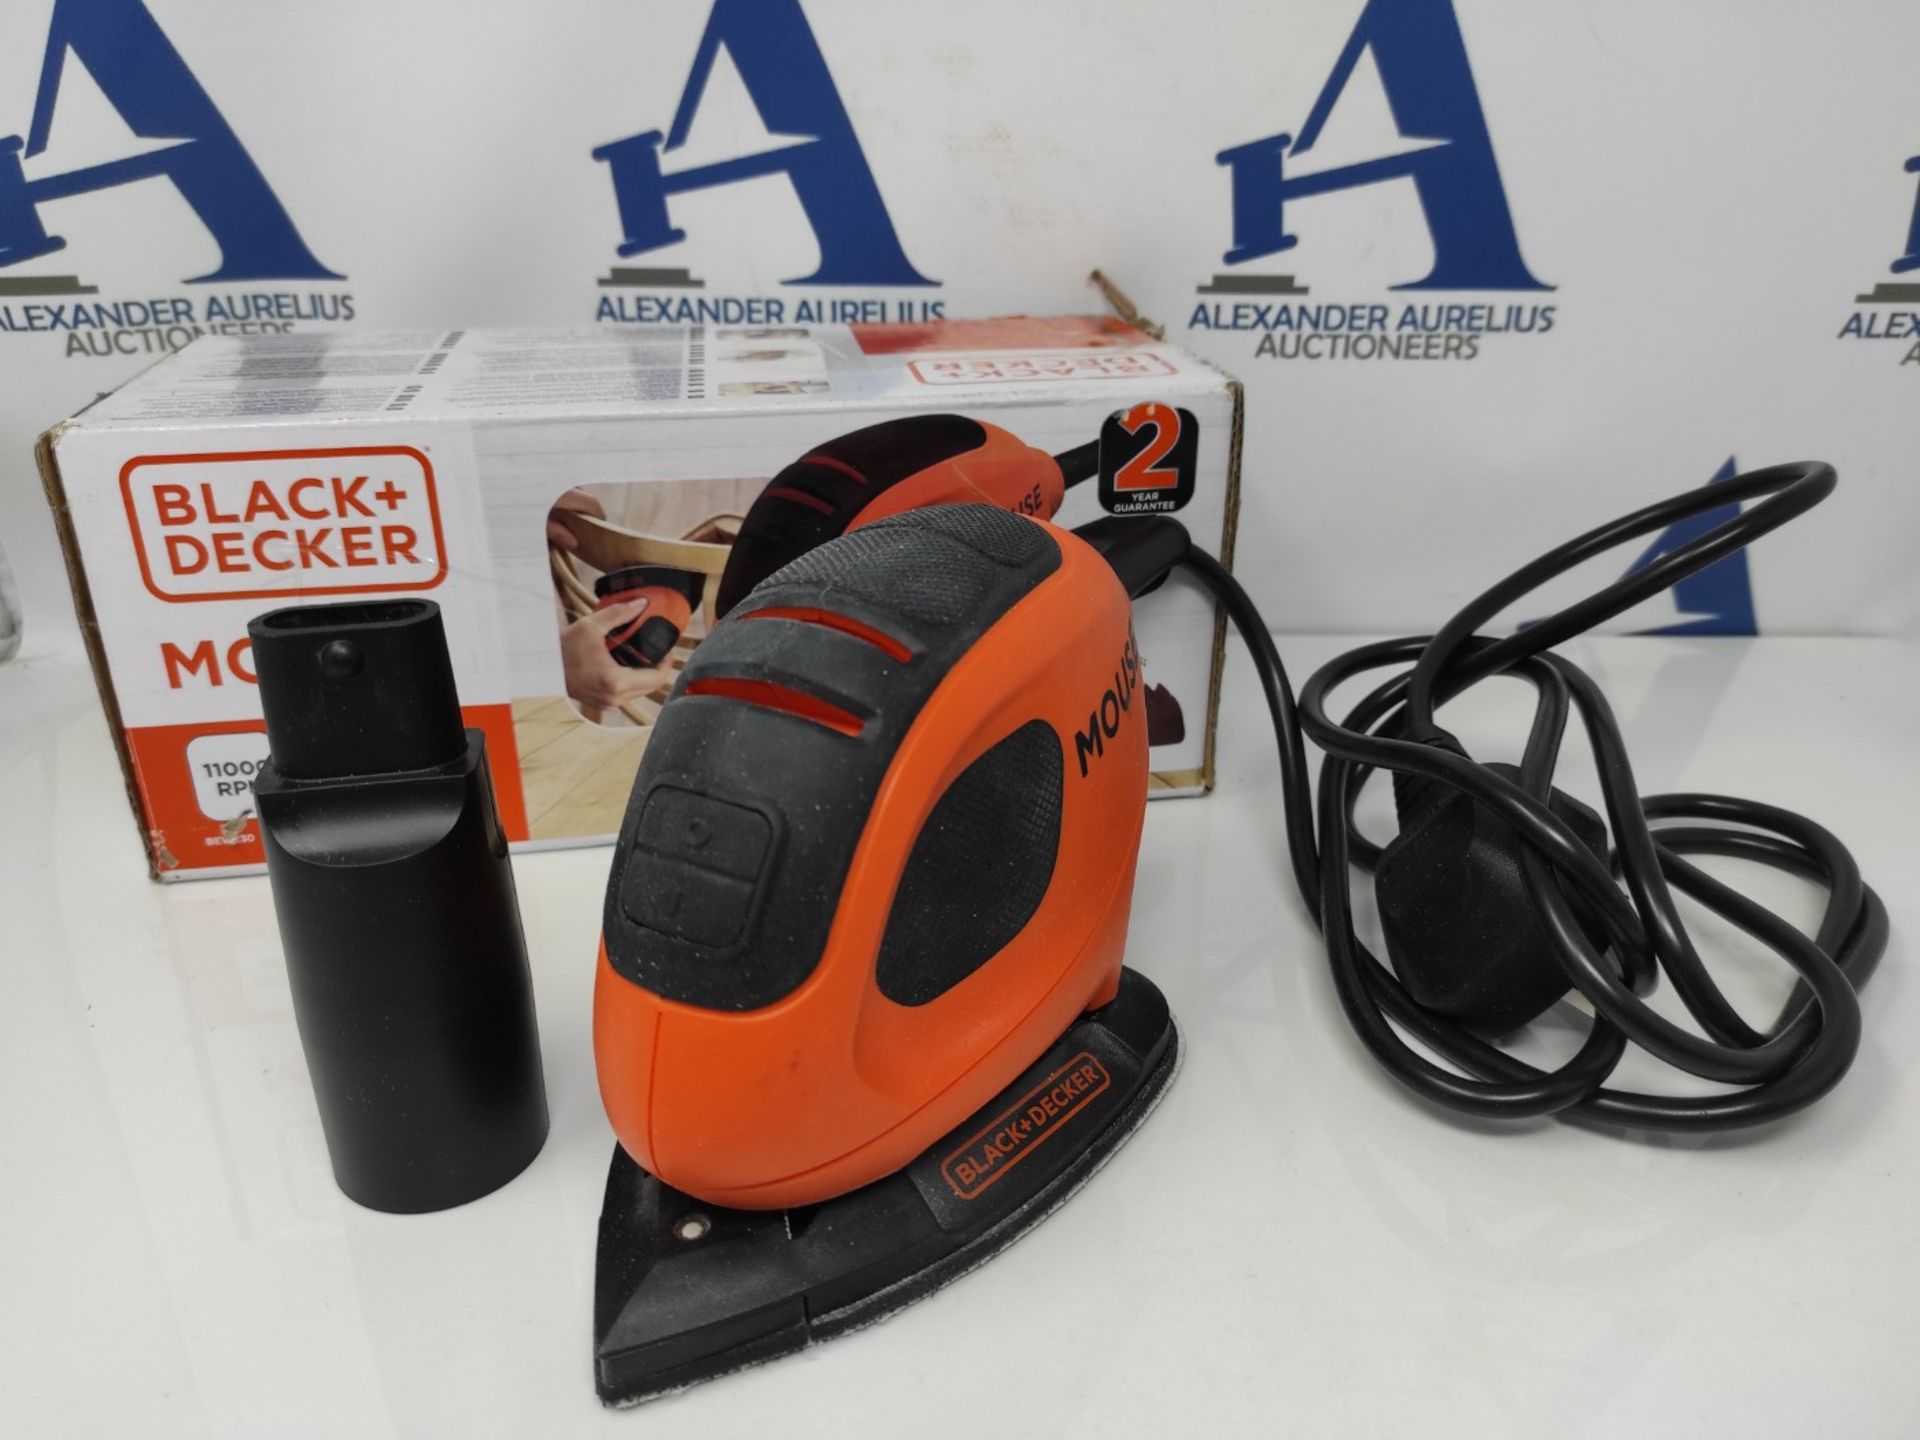 BLACK+DECKER 55 W Detail Mouse Electric Sander with 6 Sanding Sheets, BEW230-GB